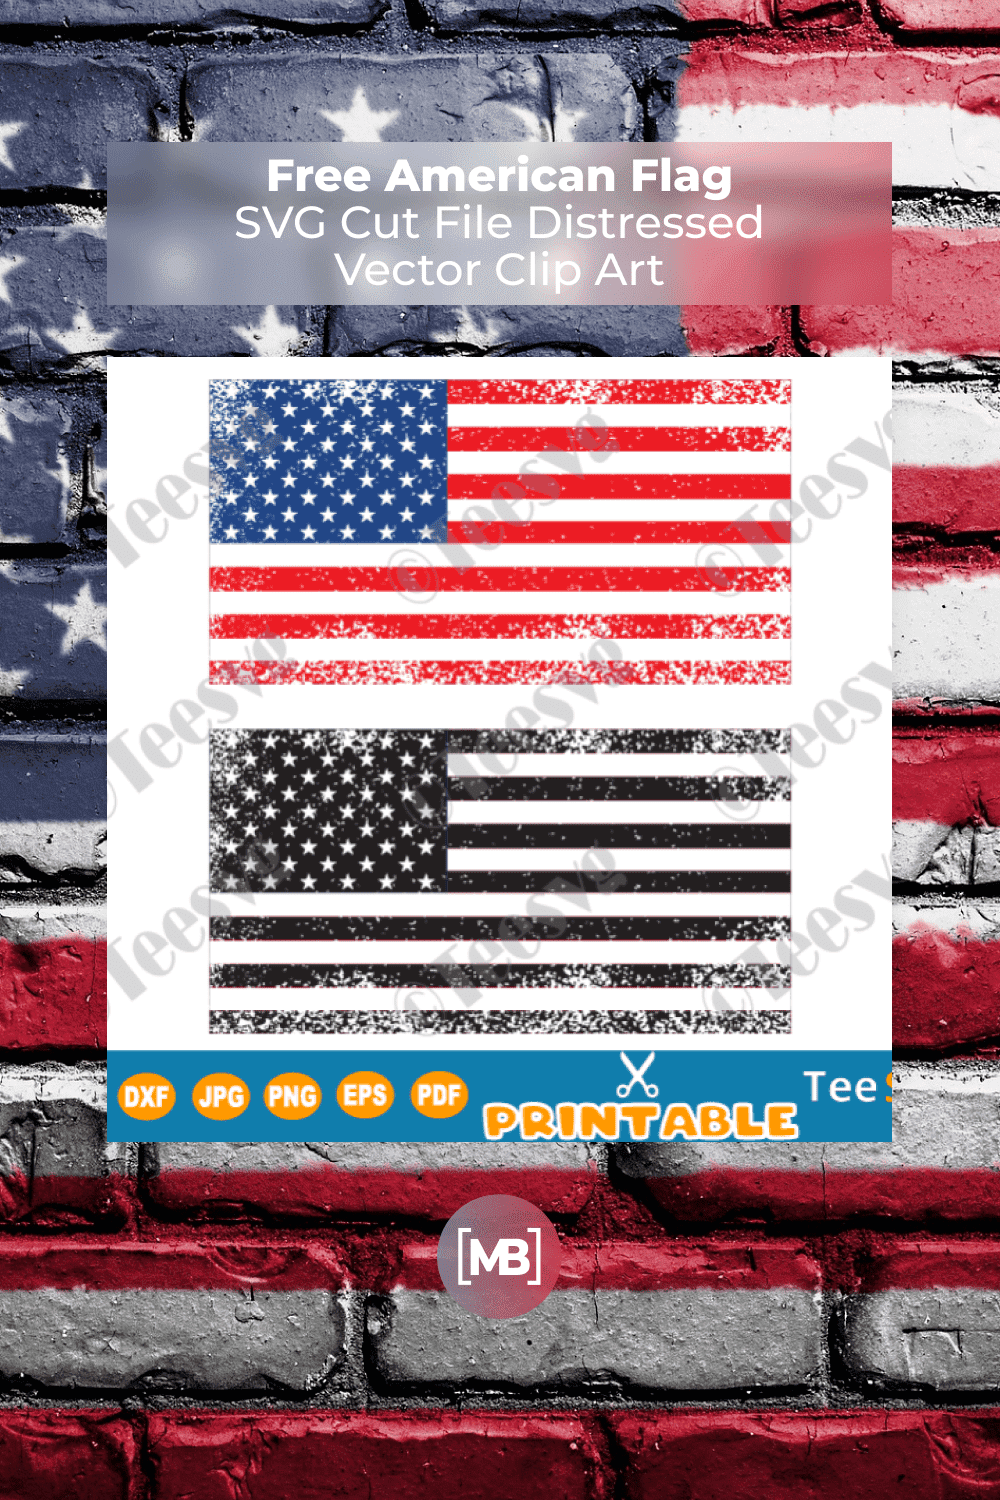 Free American Flag SVG Cut File Distressed Vector Clip Art.